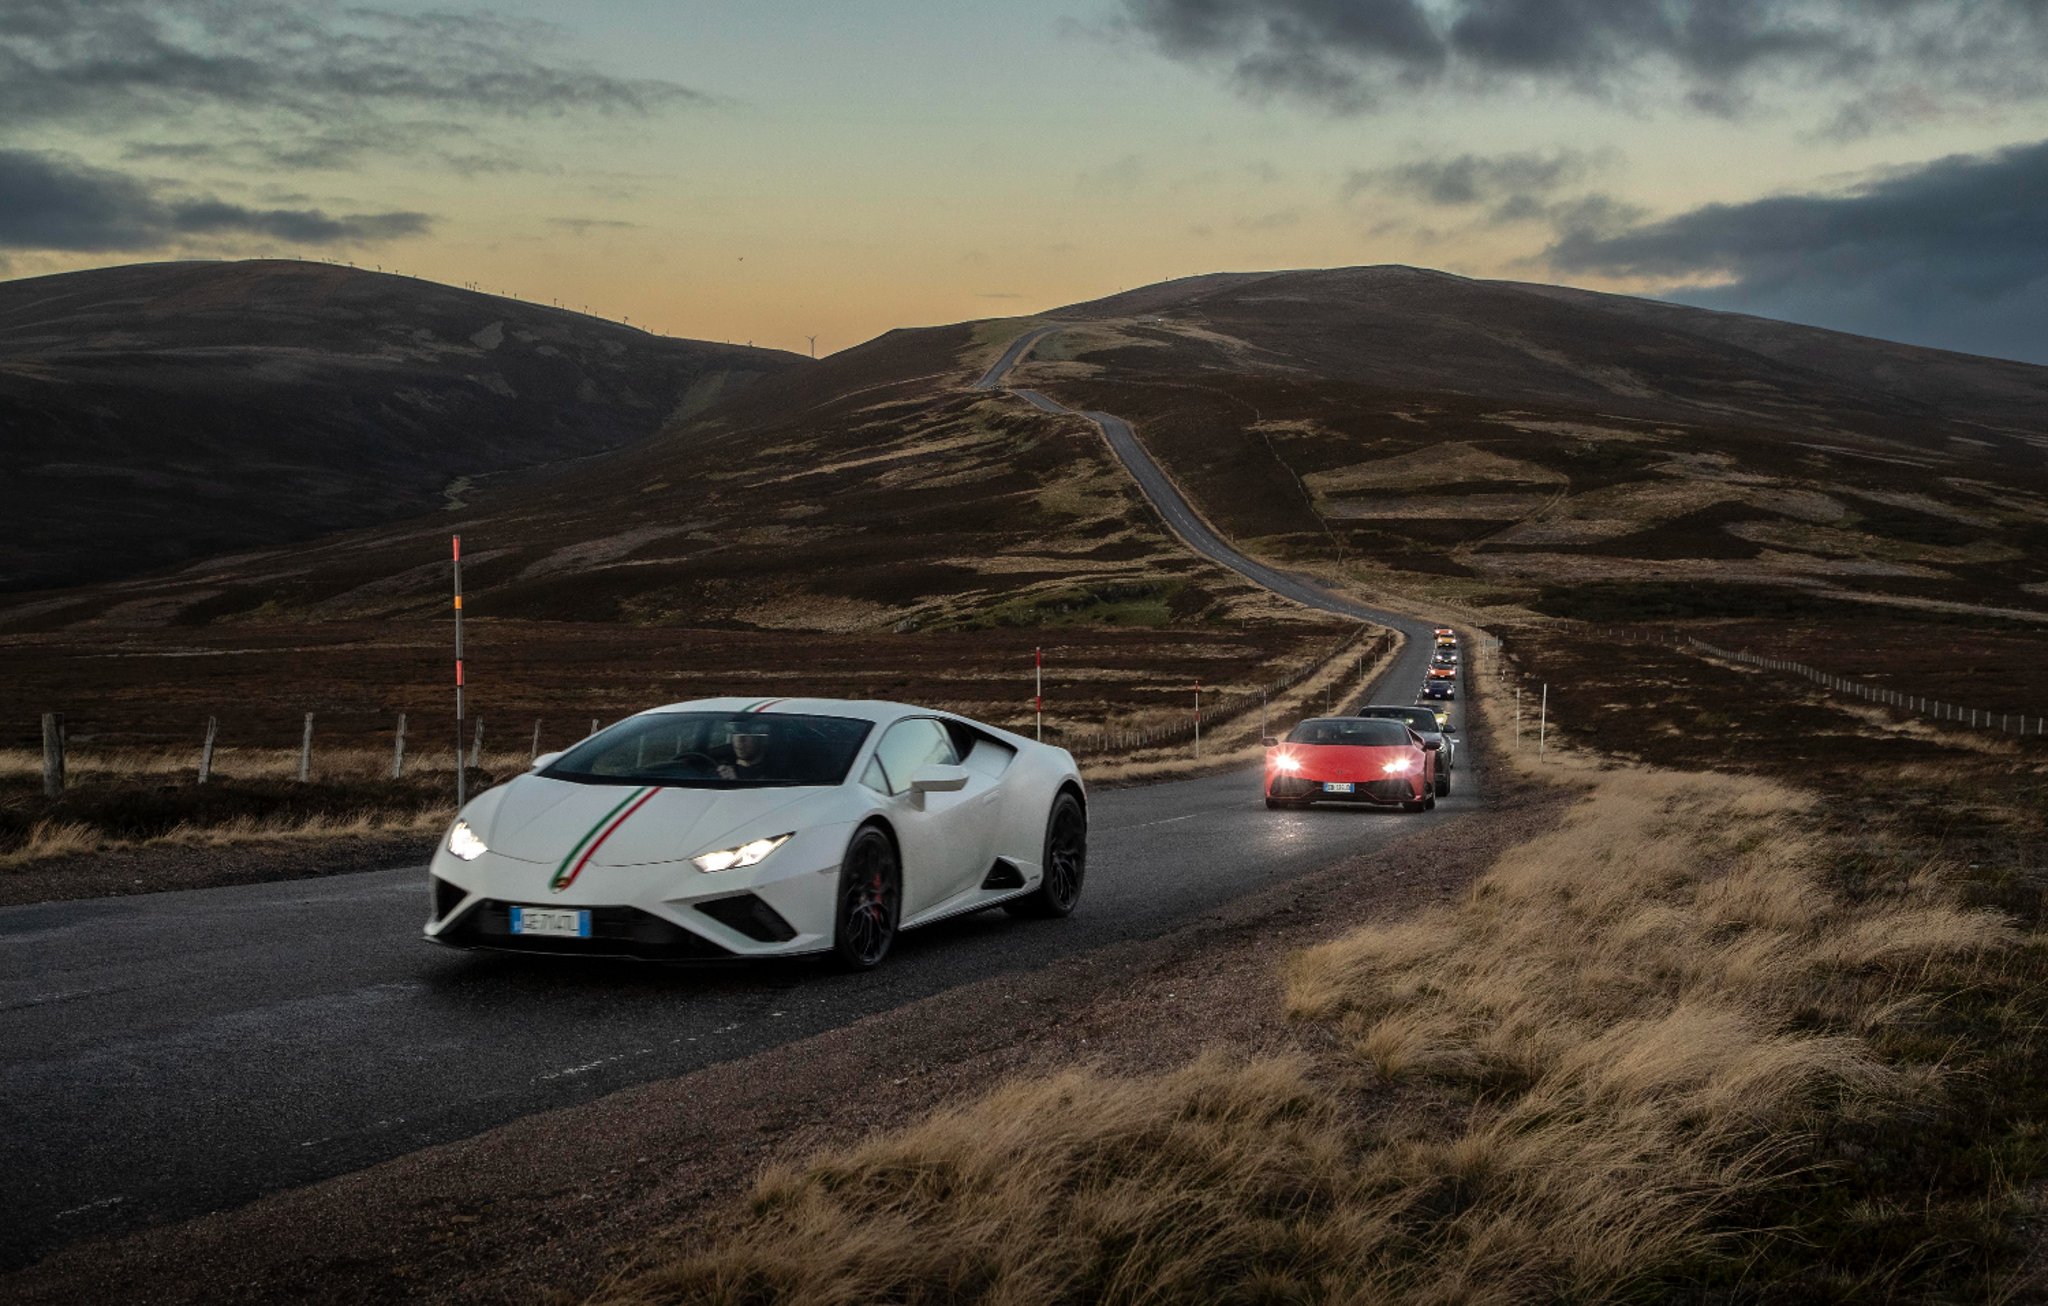 A Highland fling with Lamborghini’s raging bulls